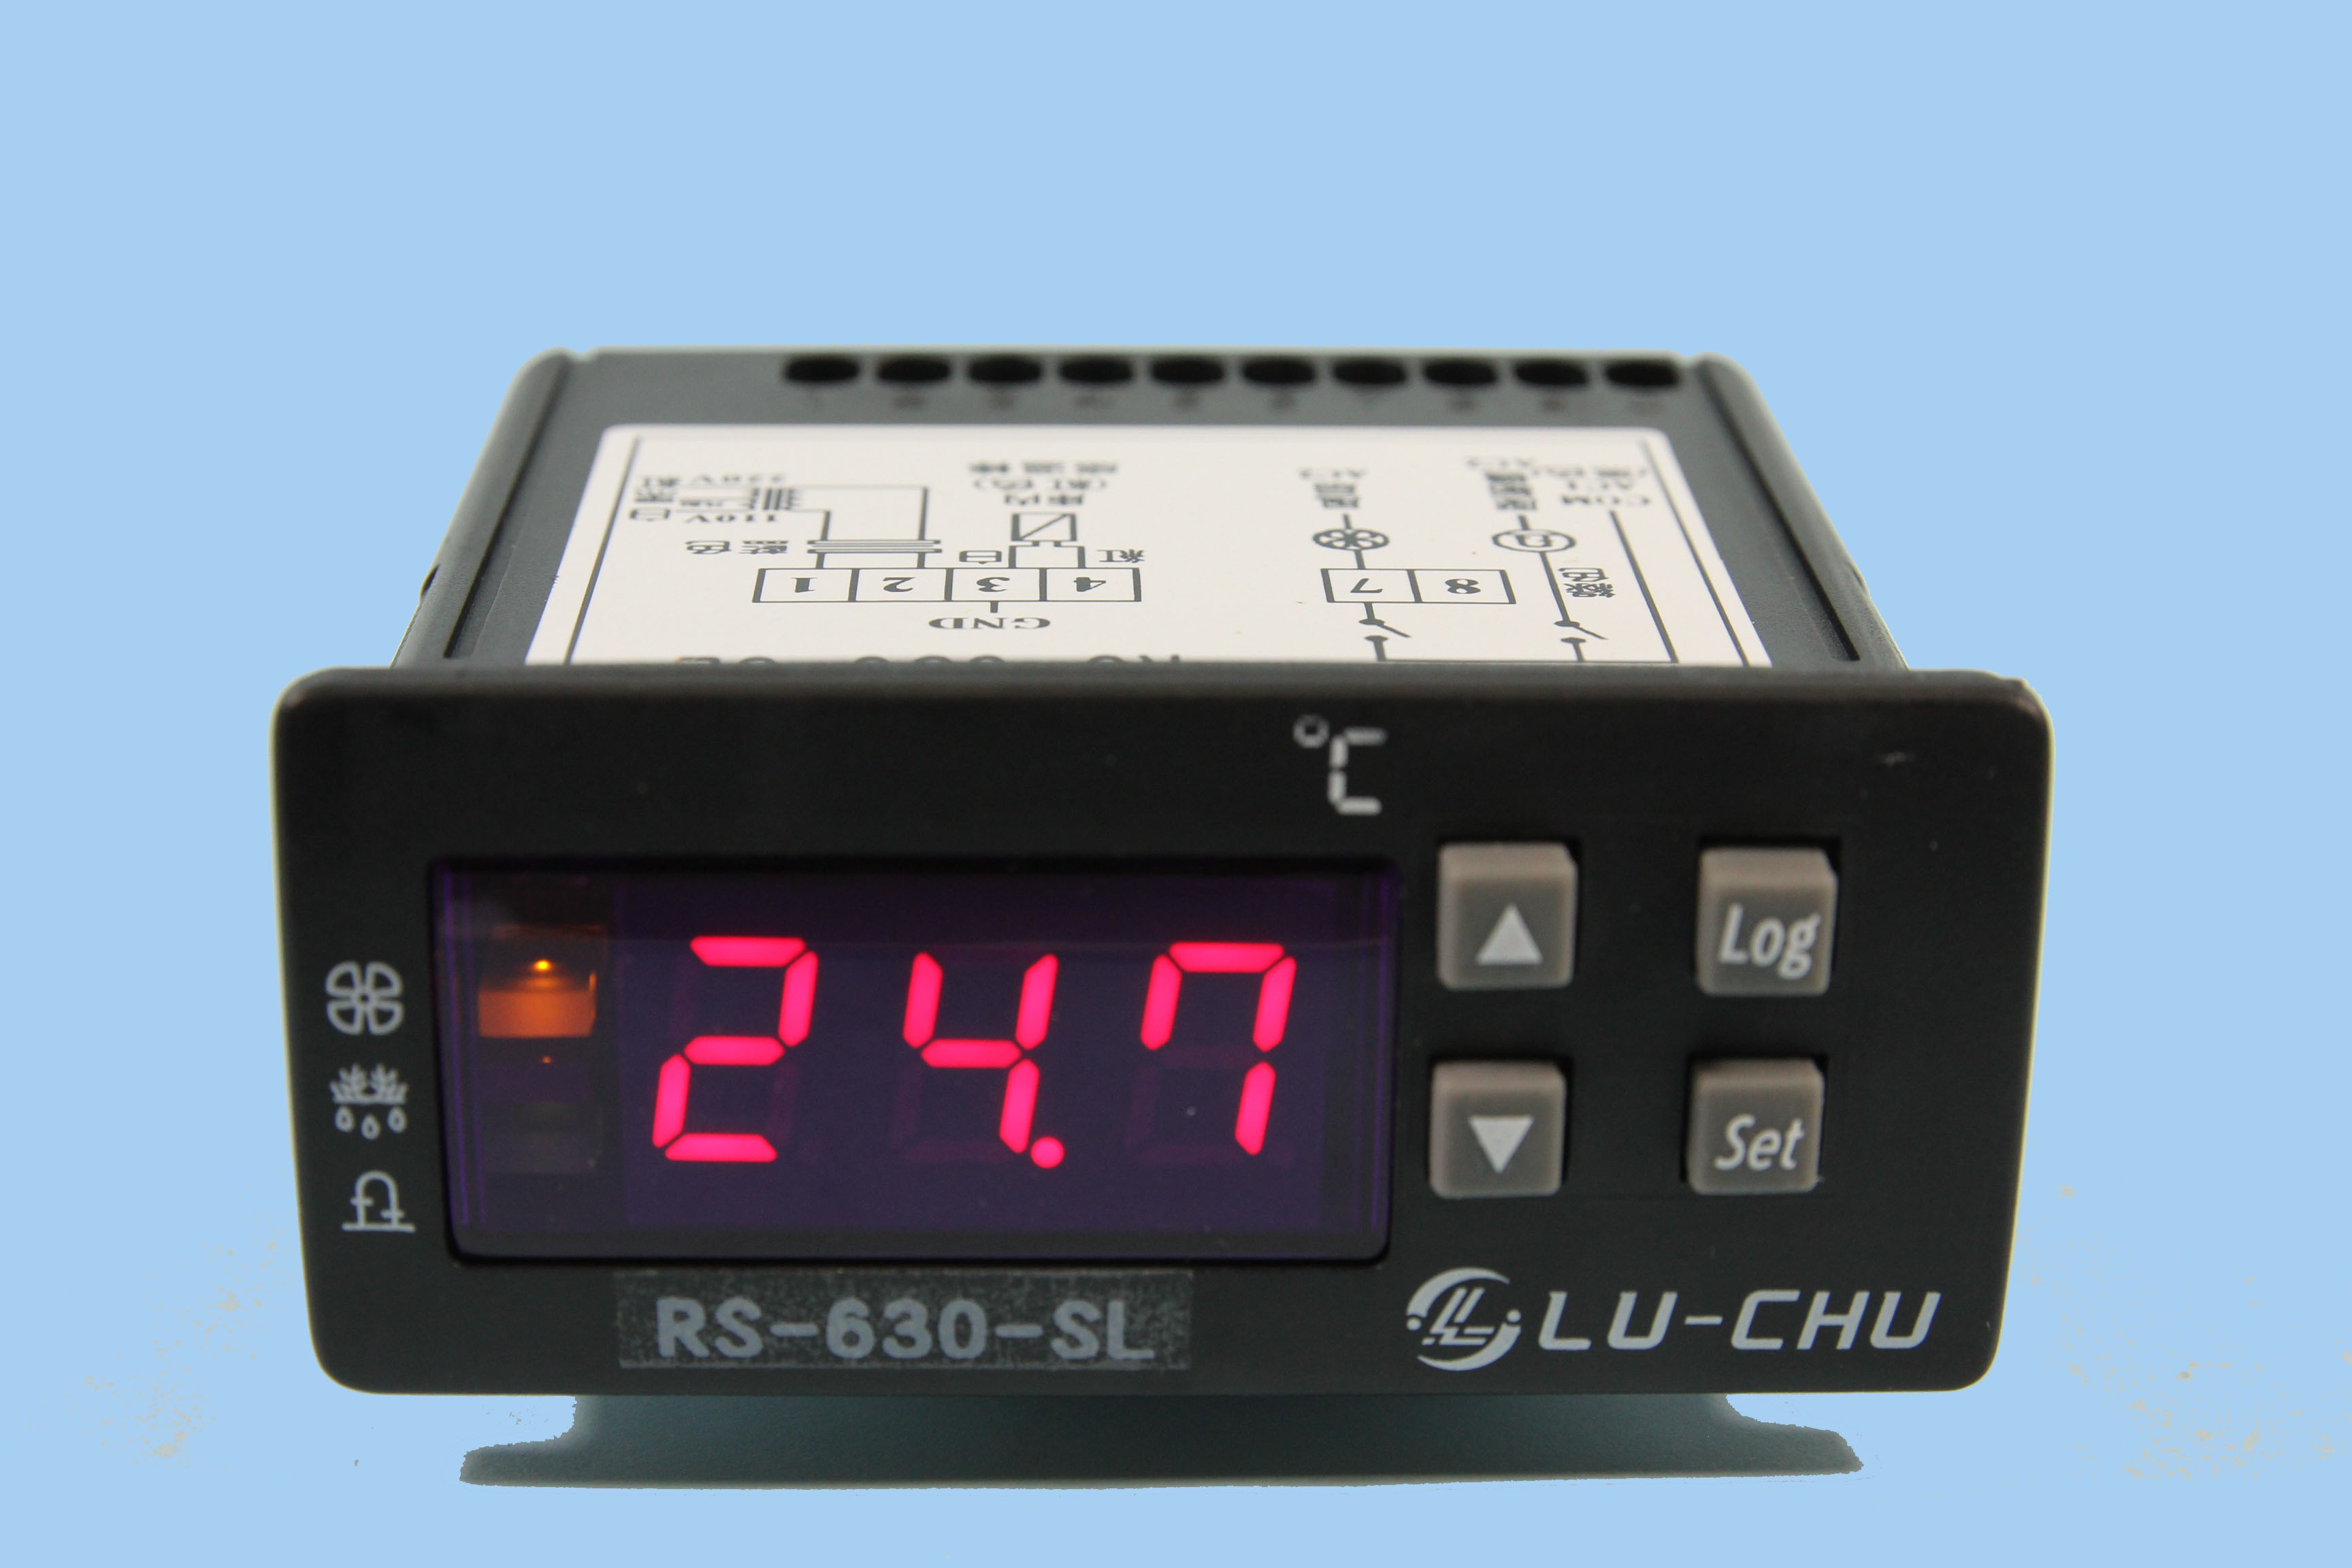  RS-630-SL冷藏控制器 超低溫